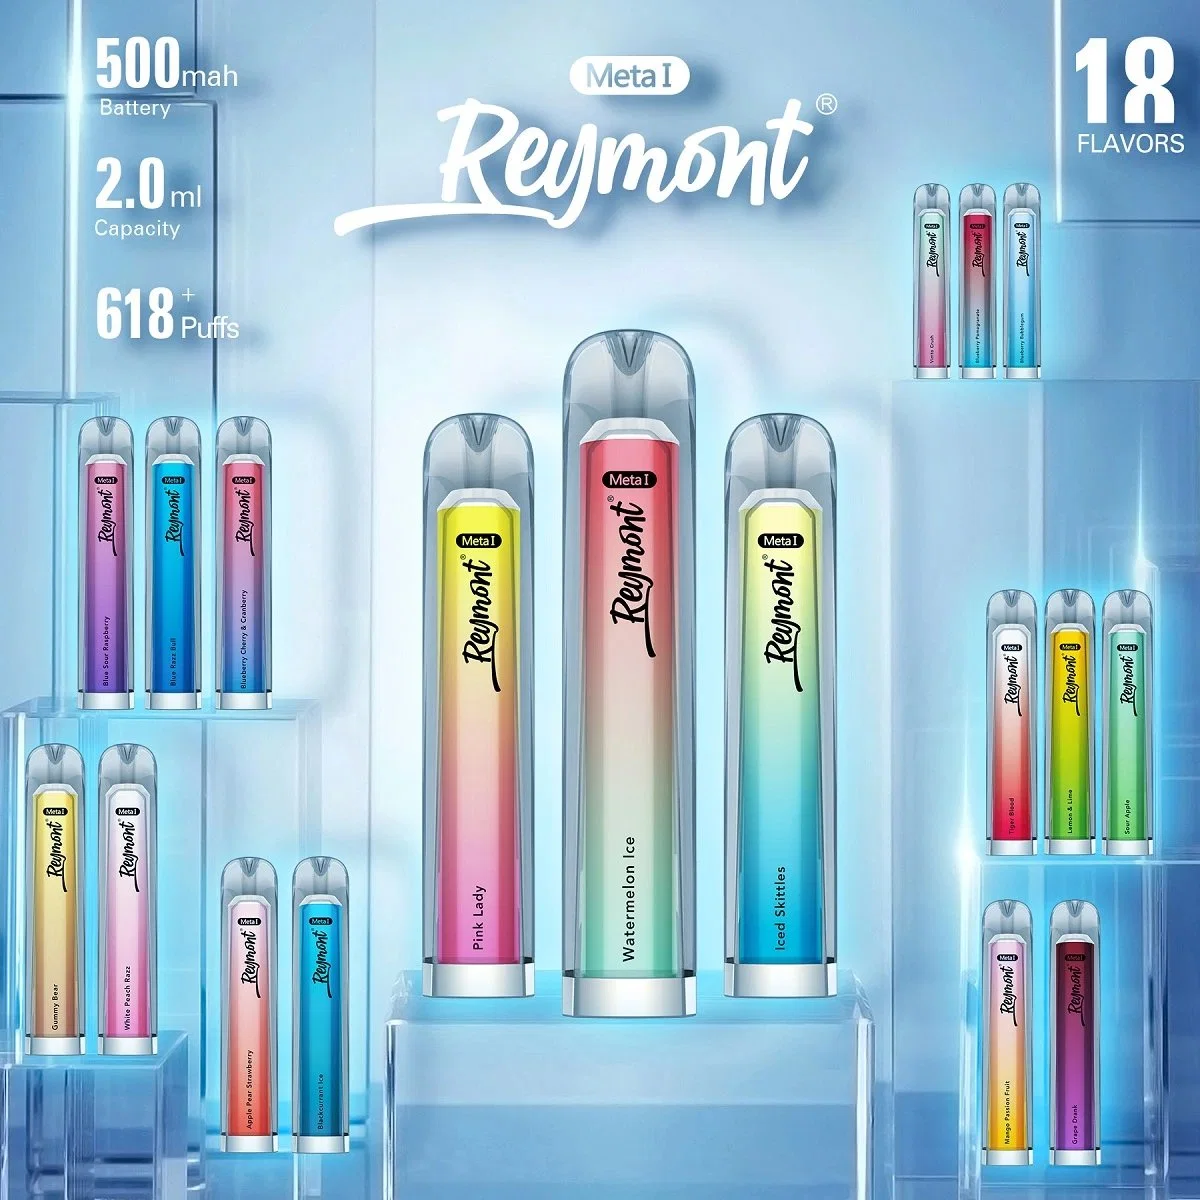 Reymont Meta Ich mag Crystal tpd verfügbar Mesh Coil up Bis 618 Puffs Einweg elektronische Zigarette Vape Pen